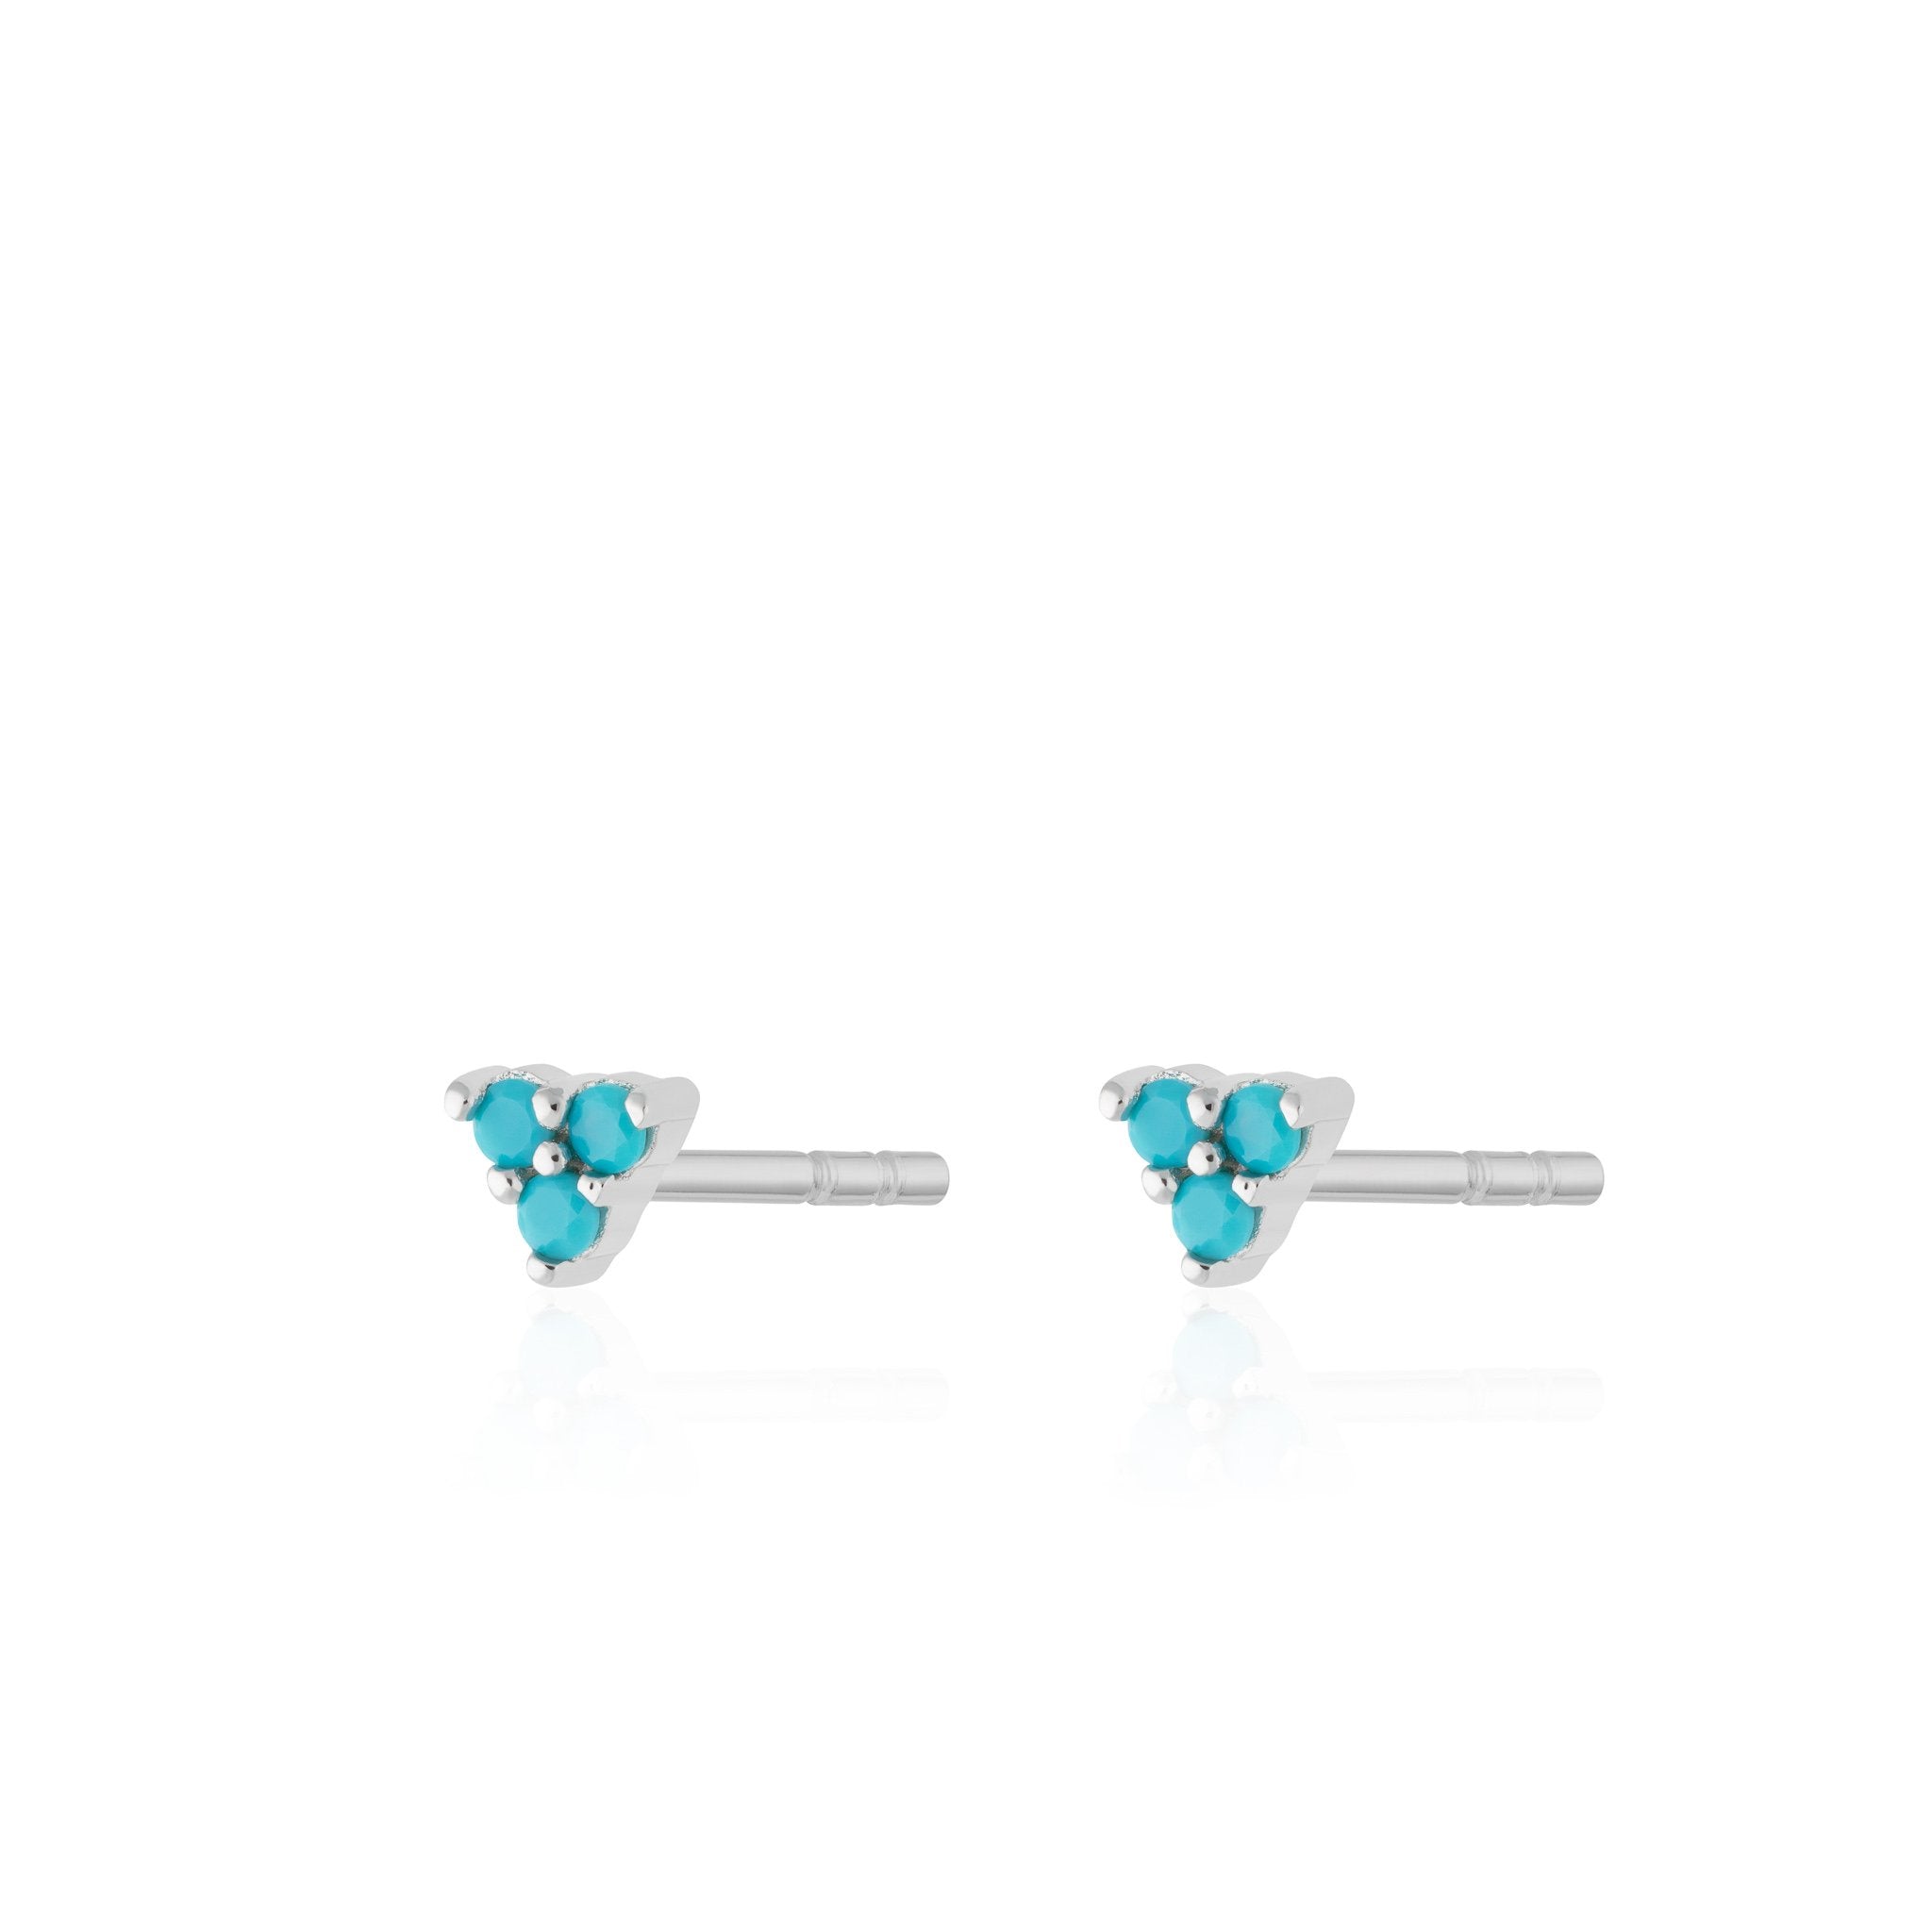  Turquoise Trinity Stud Earrings - by Scream Pretty